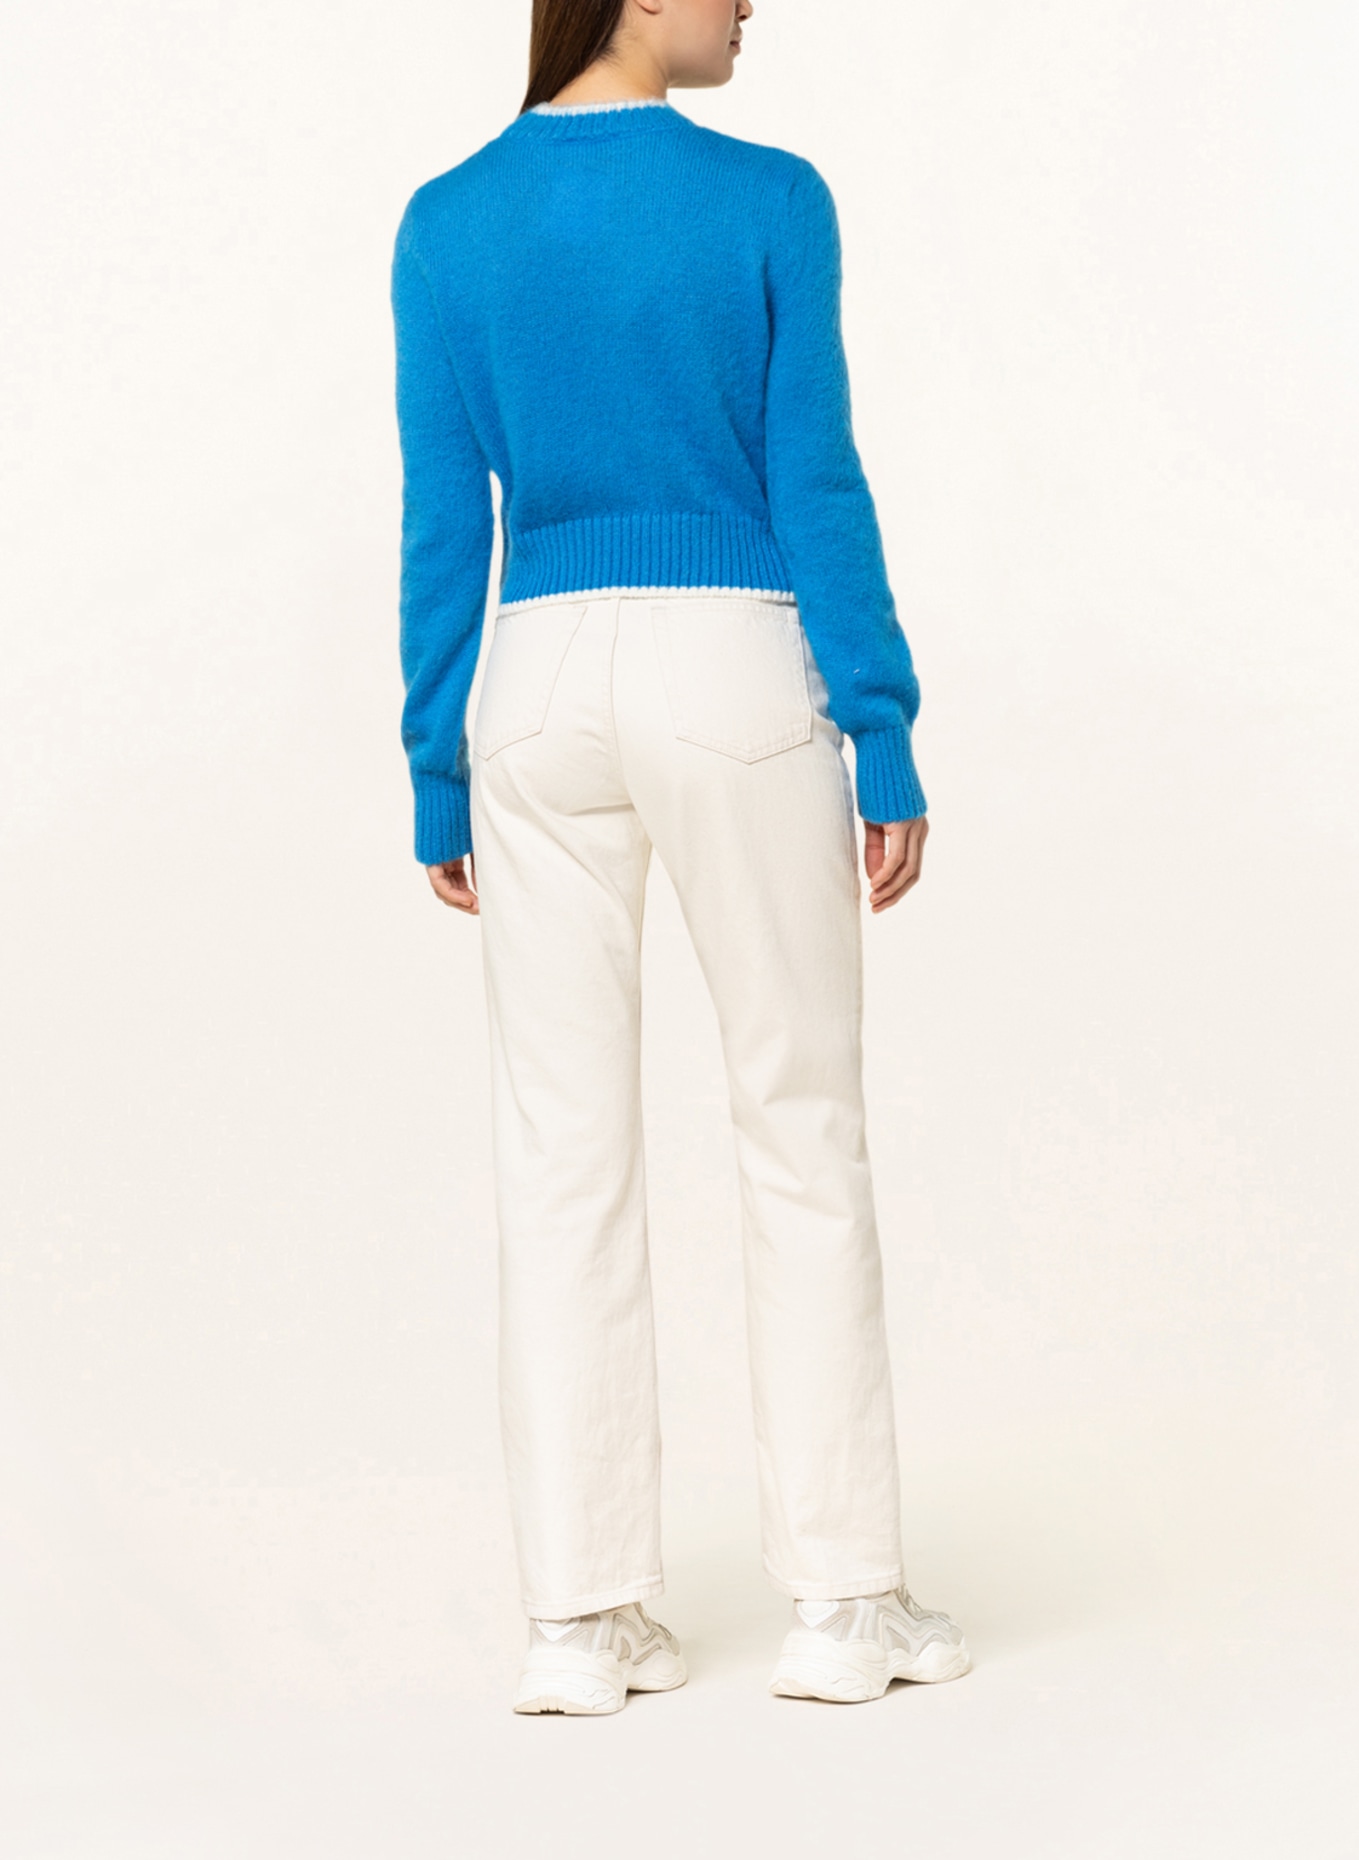 FIORUCCI Pullover mit Mohair, Farbe: BLAU/ WEISS (Bild 3)